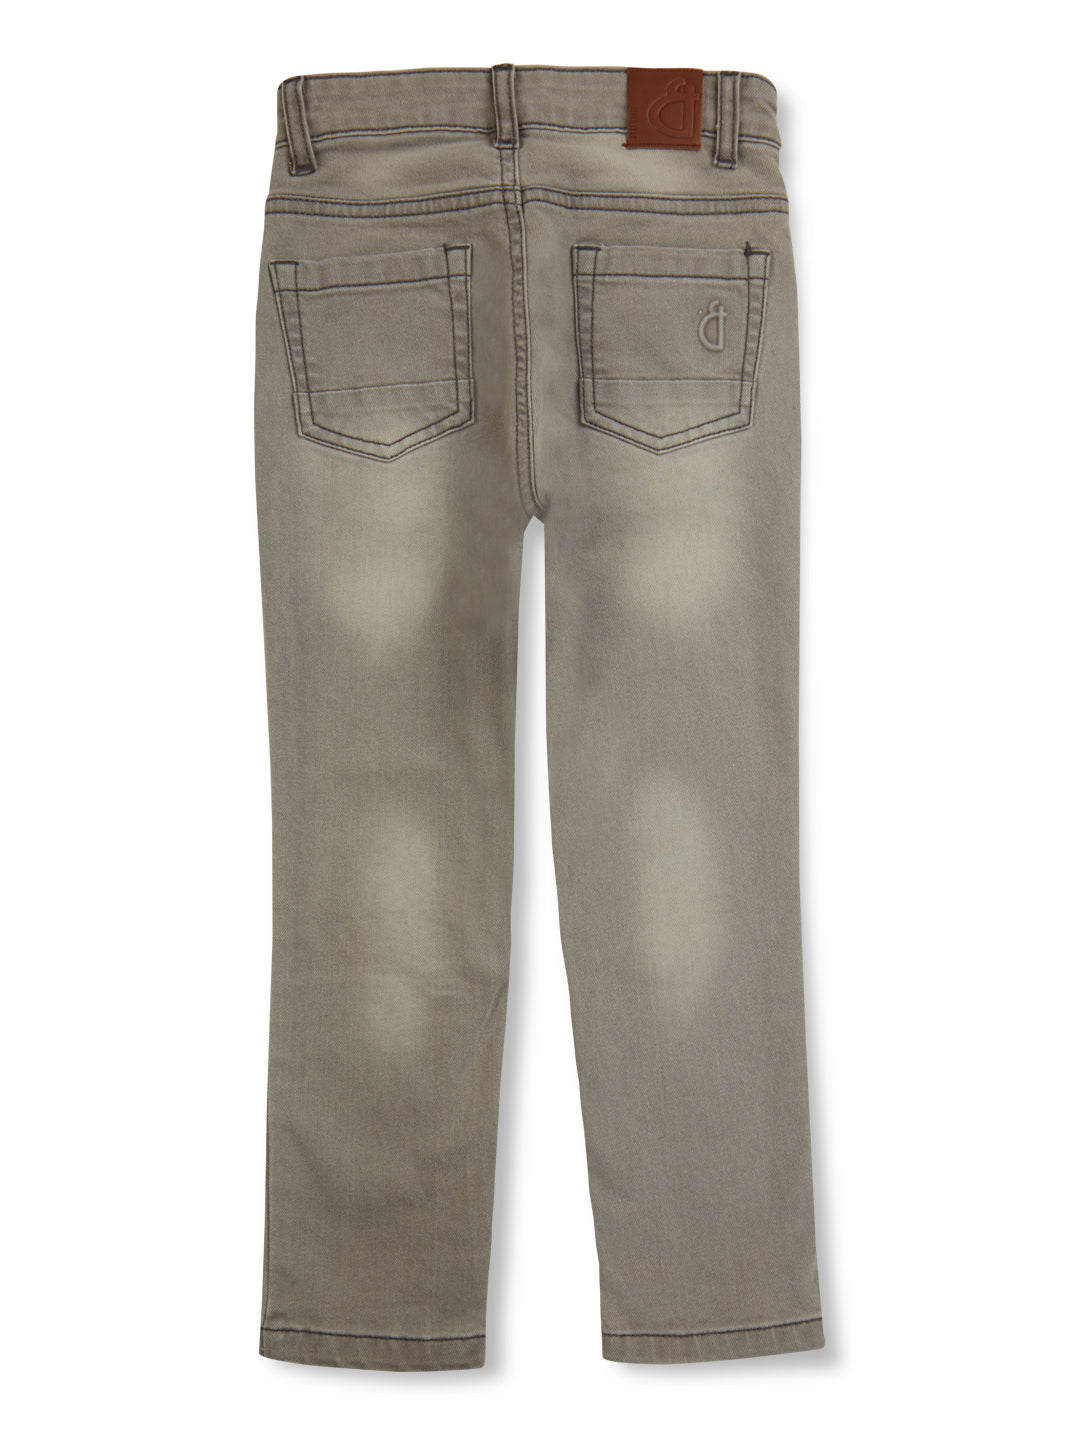 Boys Grey Washed Denim Jeans